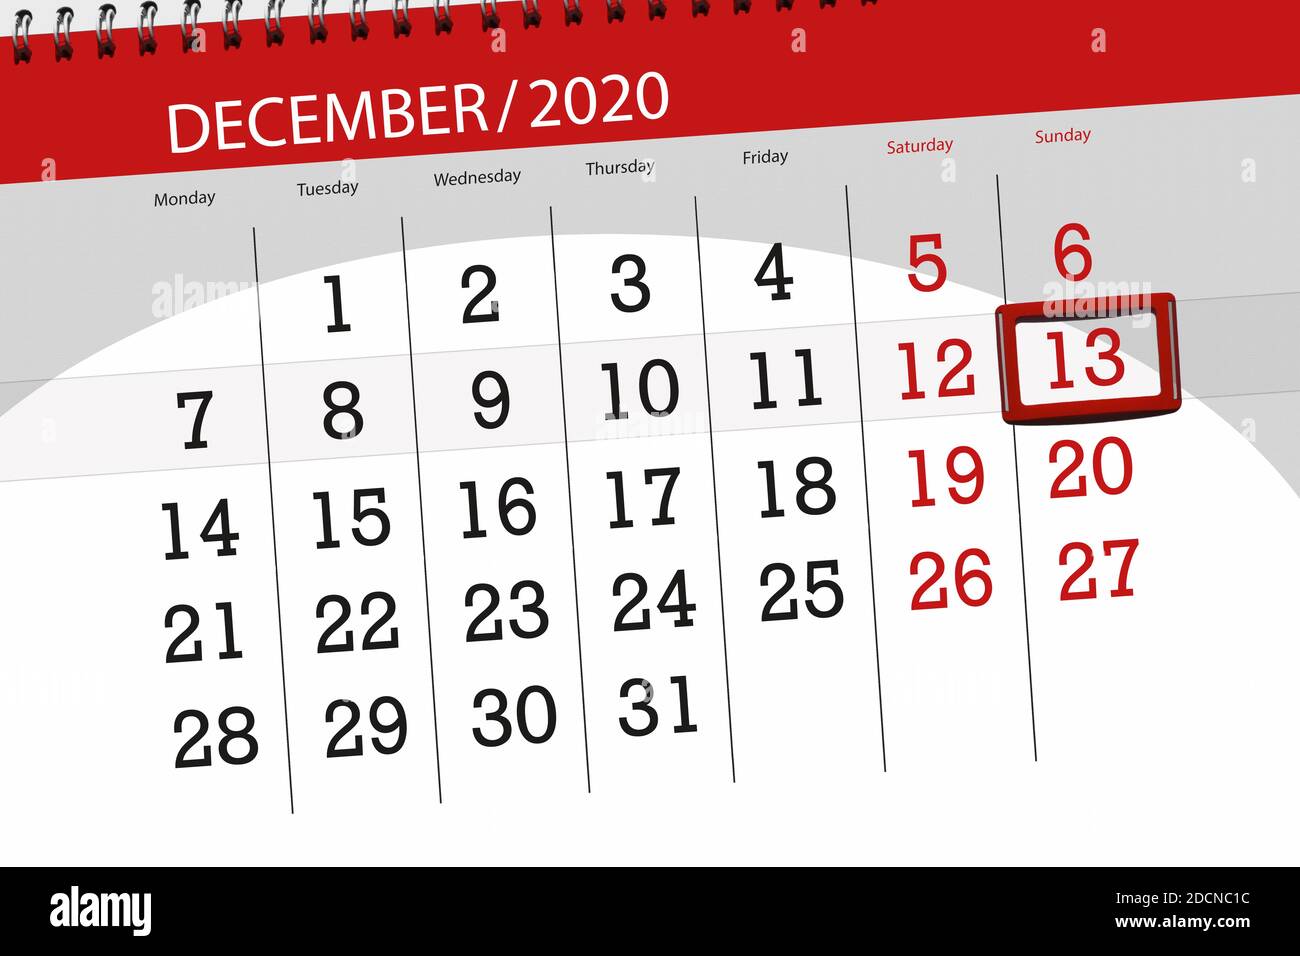 Calendar Planner For The Month December Deadline Day 13 Sunday Stock Photo Alamy